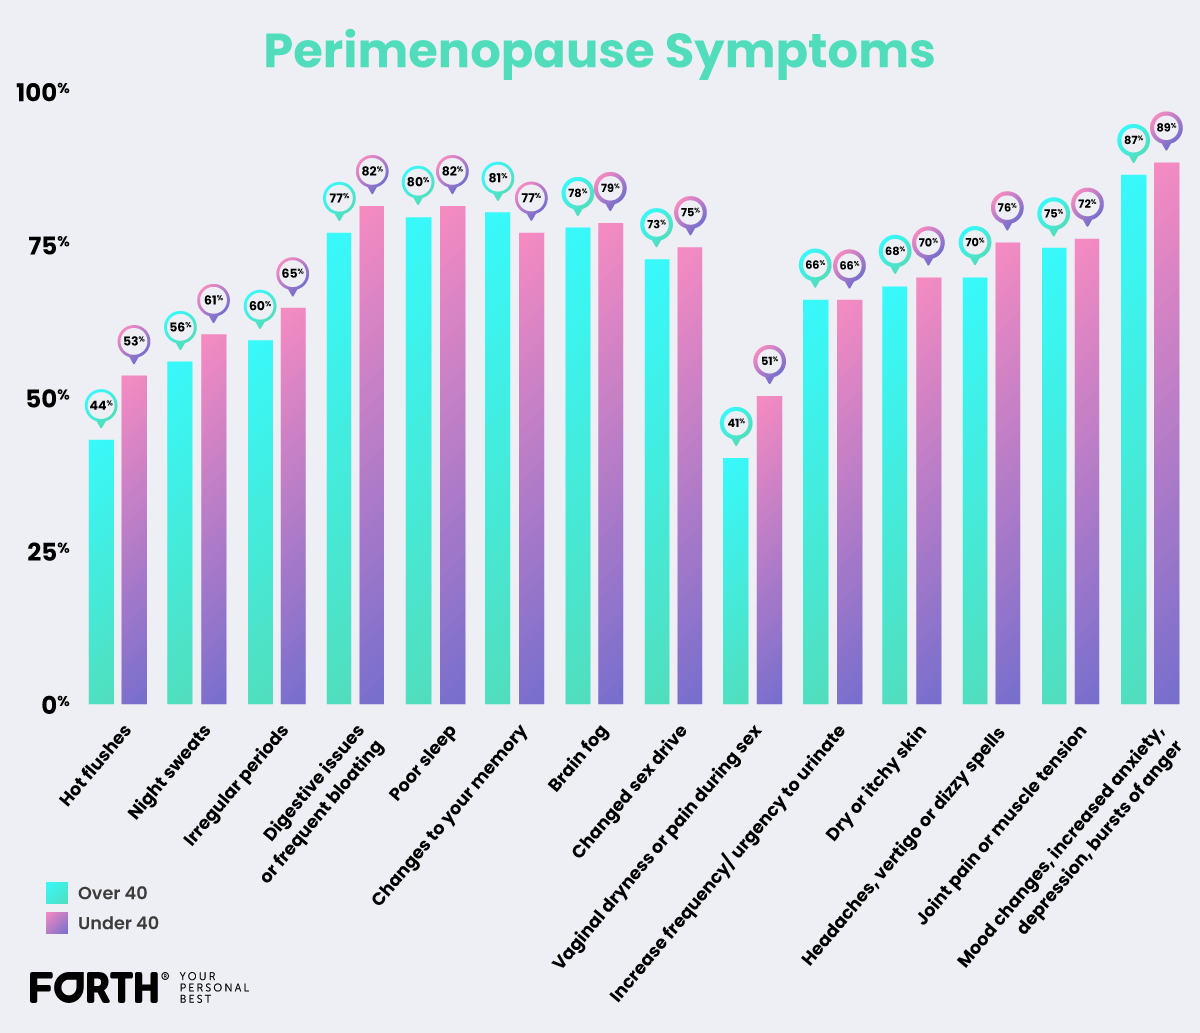 Perimenopause symptoms statistics